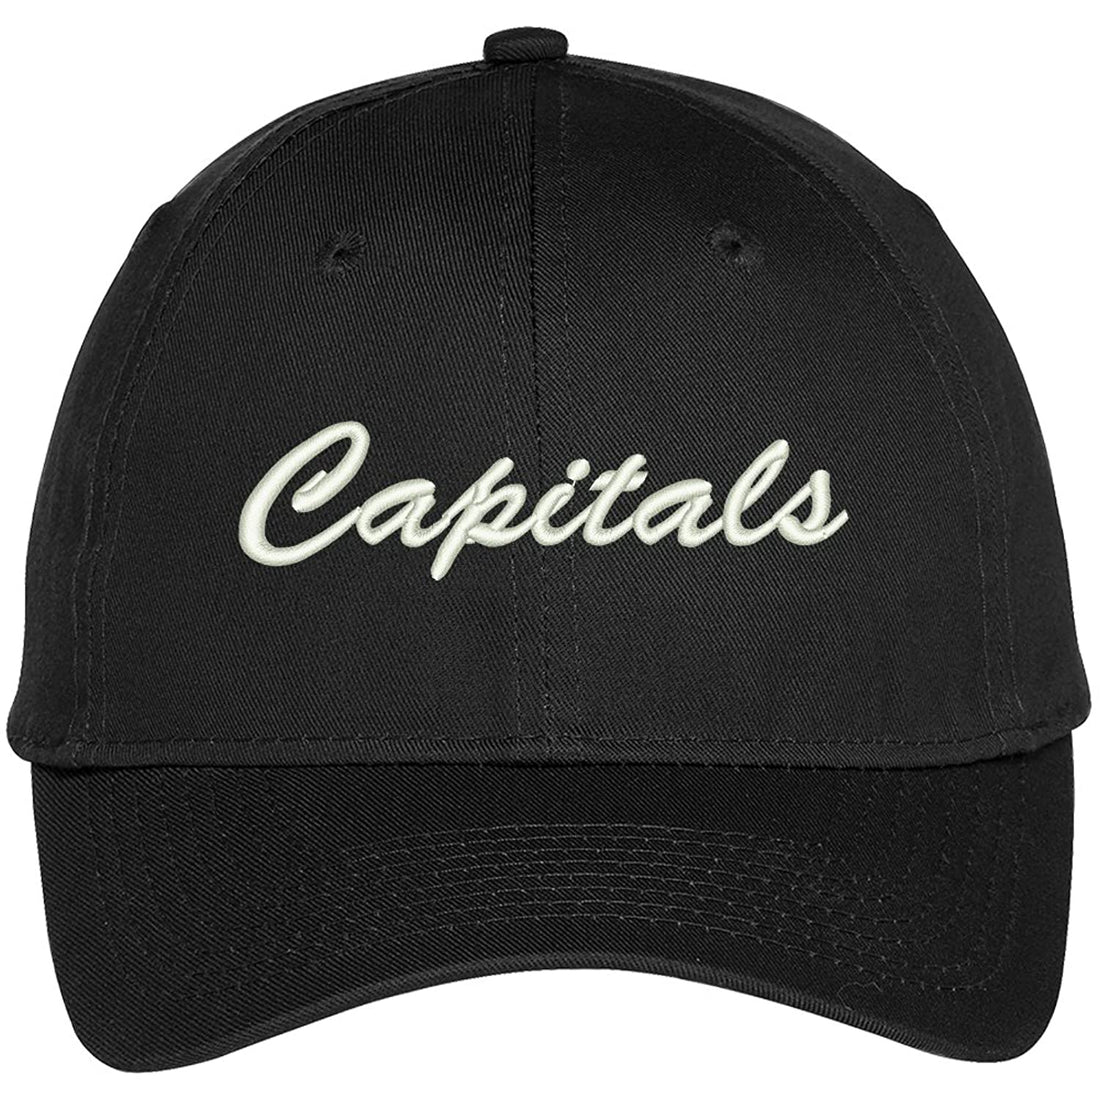 Trendy Apparel Shop Capitals Embroidered Precurved Adjustable Cap